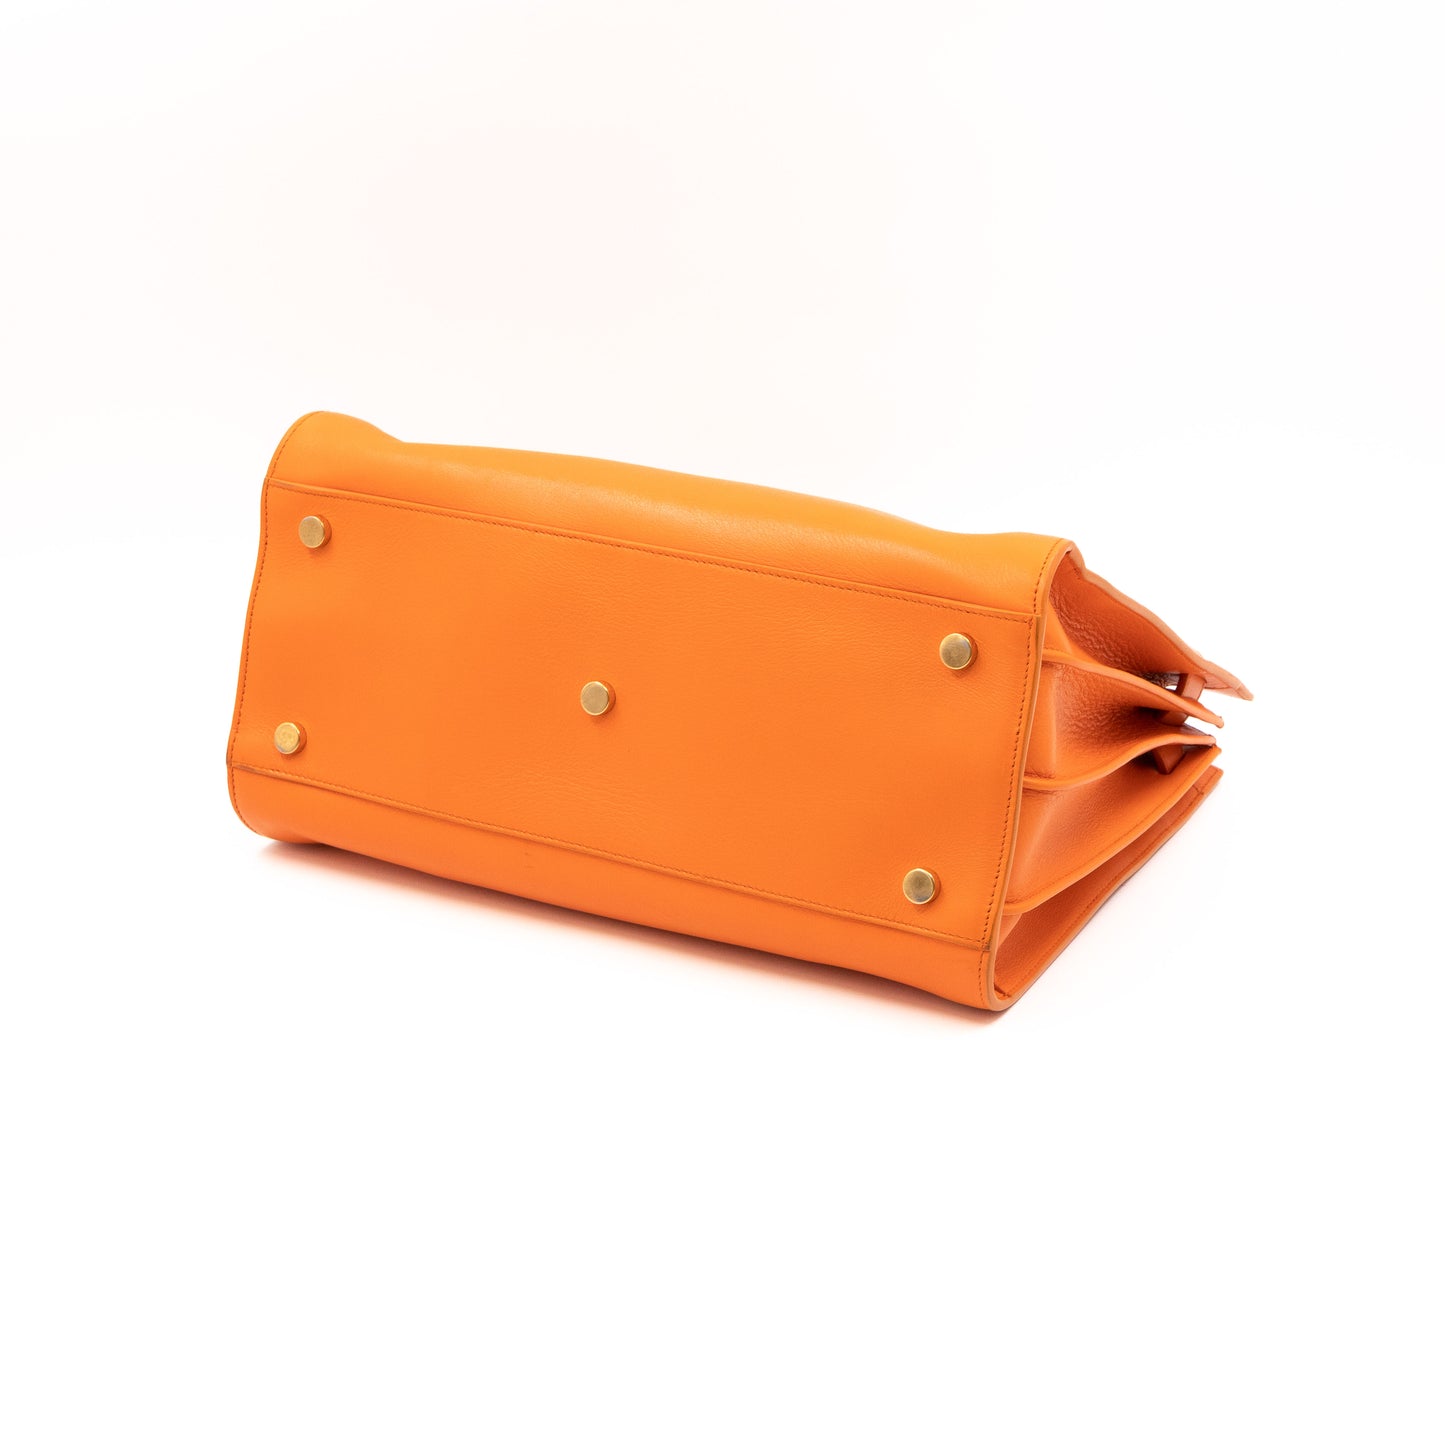 Sac de Jour Small Orange Leather